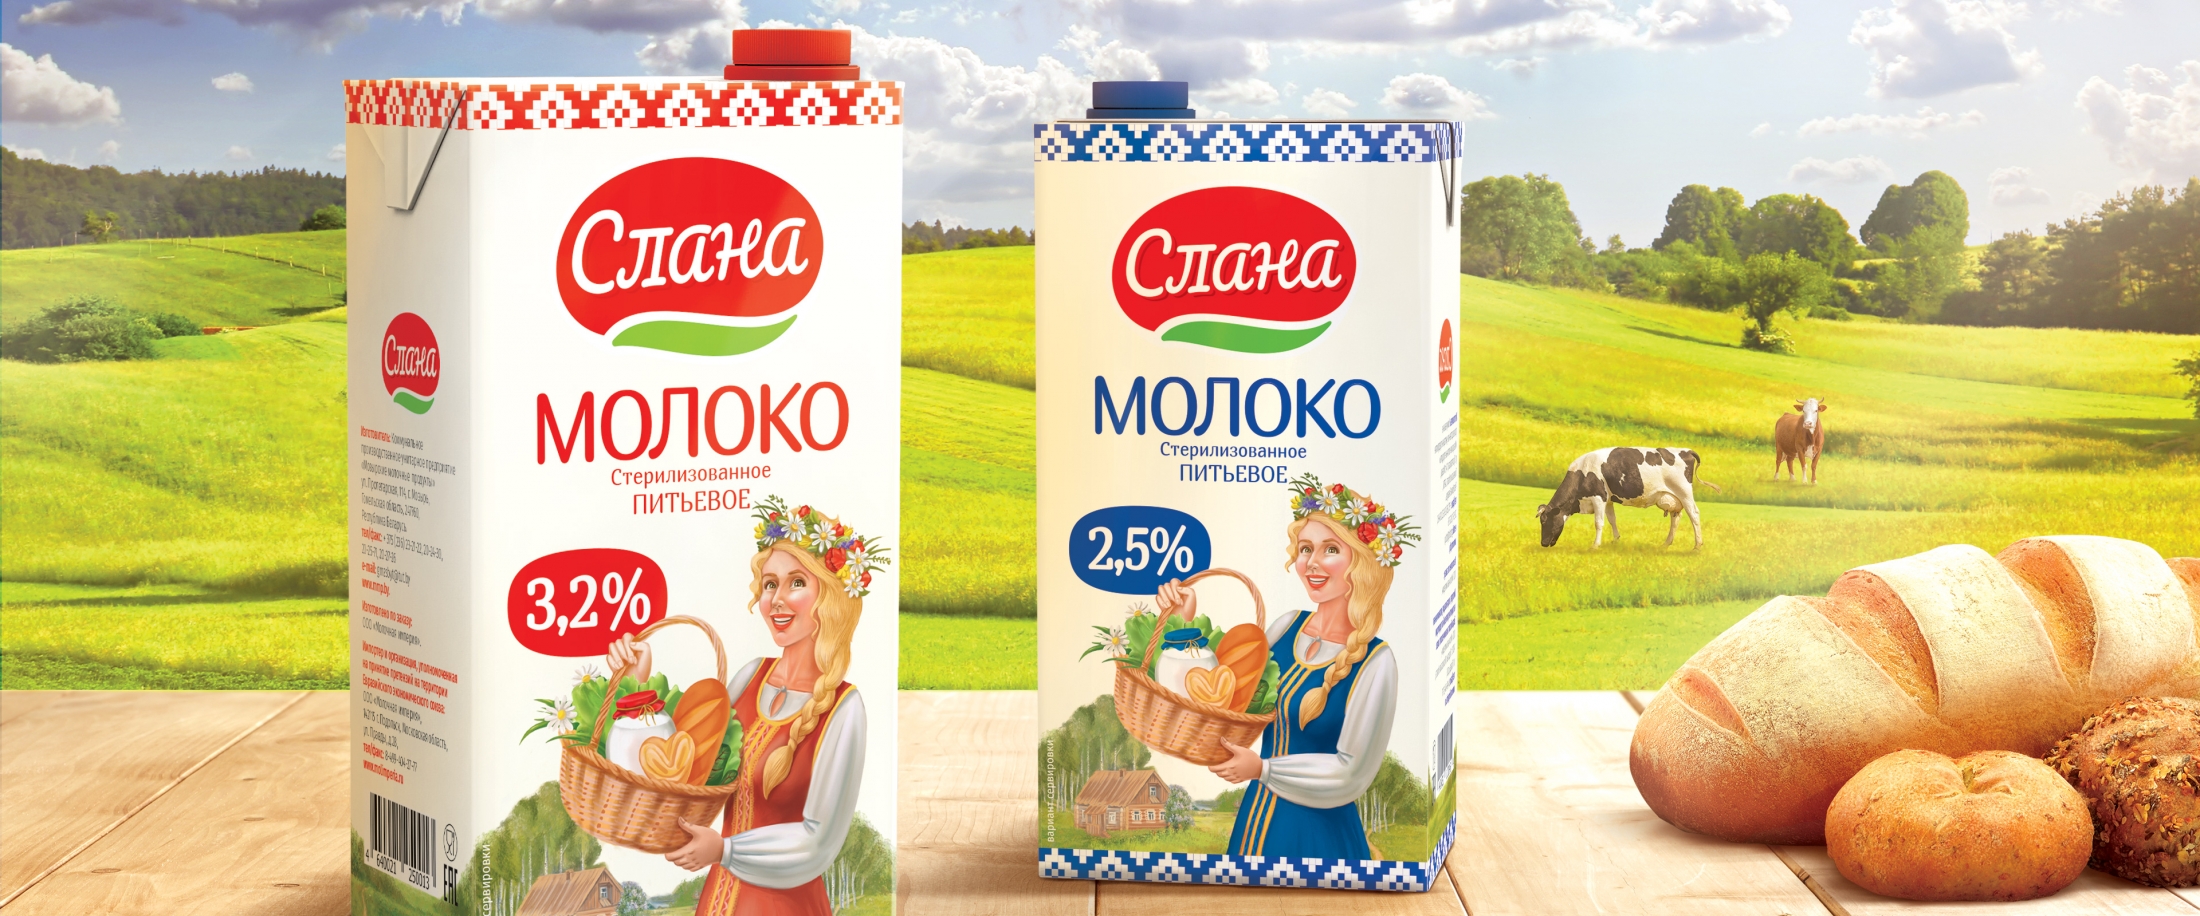 Дизайн упаковки молока бренда «Слана»